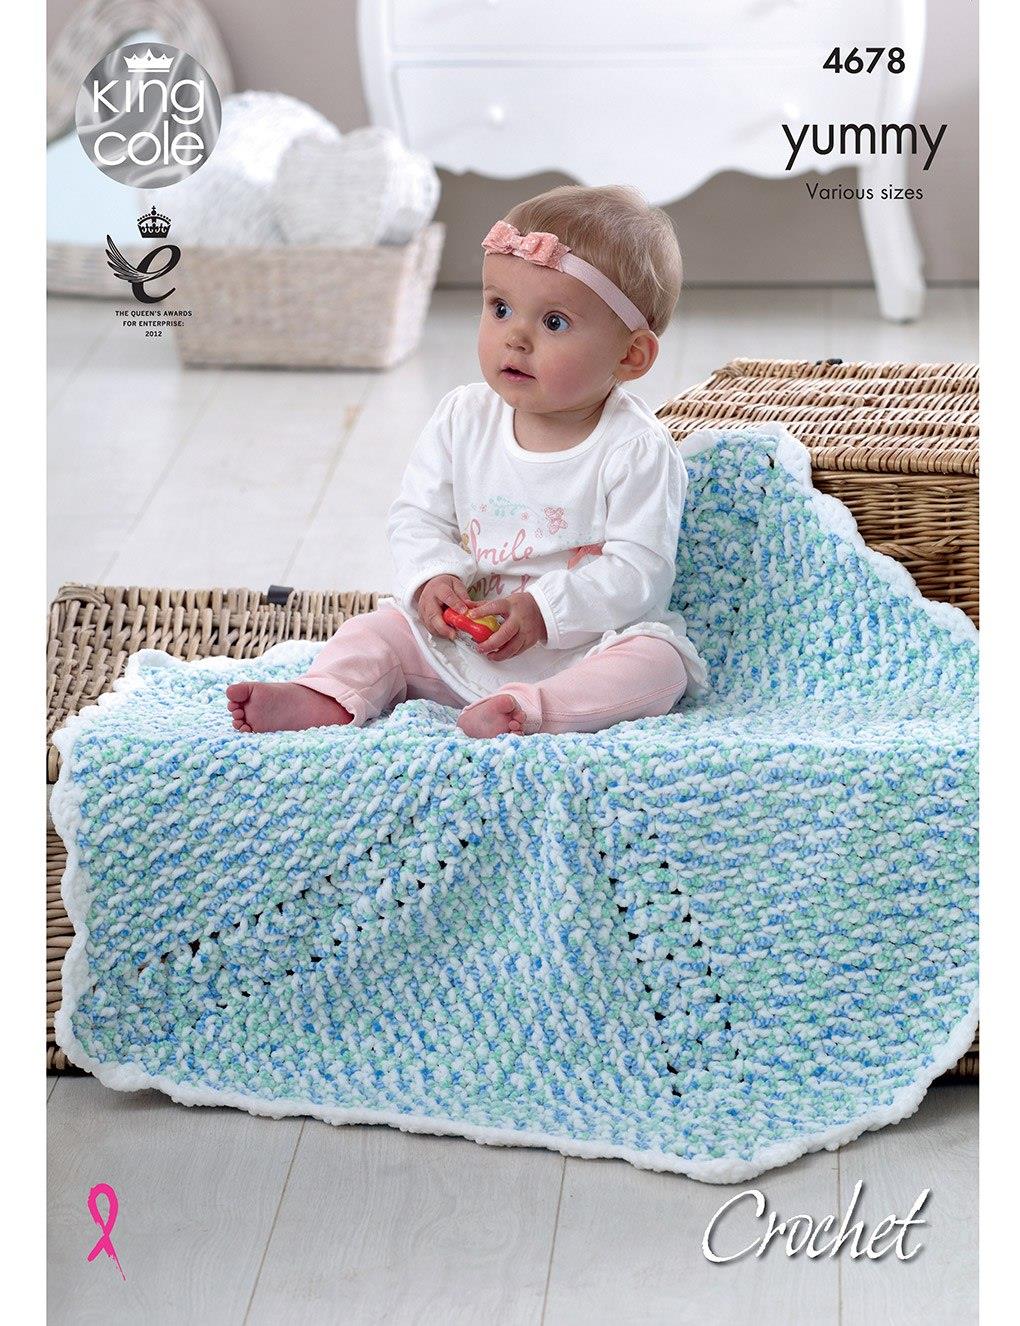 King Cole Yummy knitting pattern (4678) crochet blankets